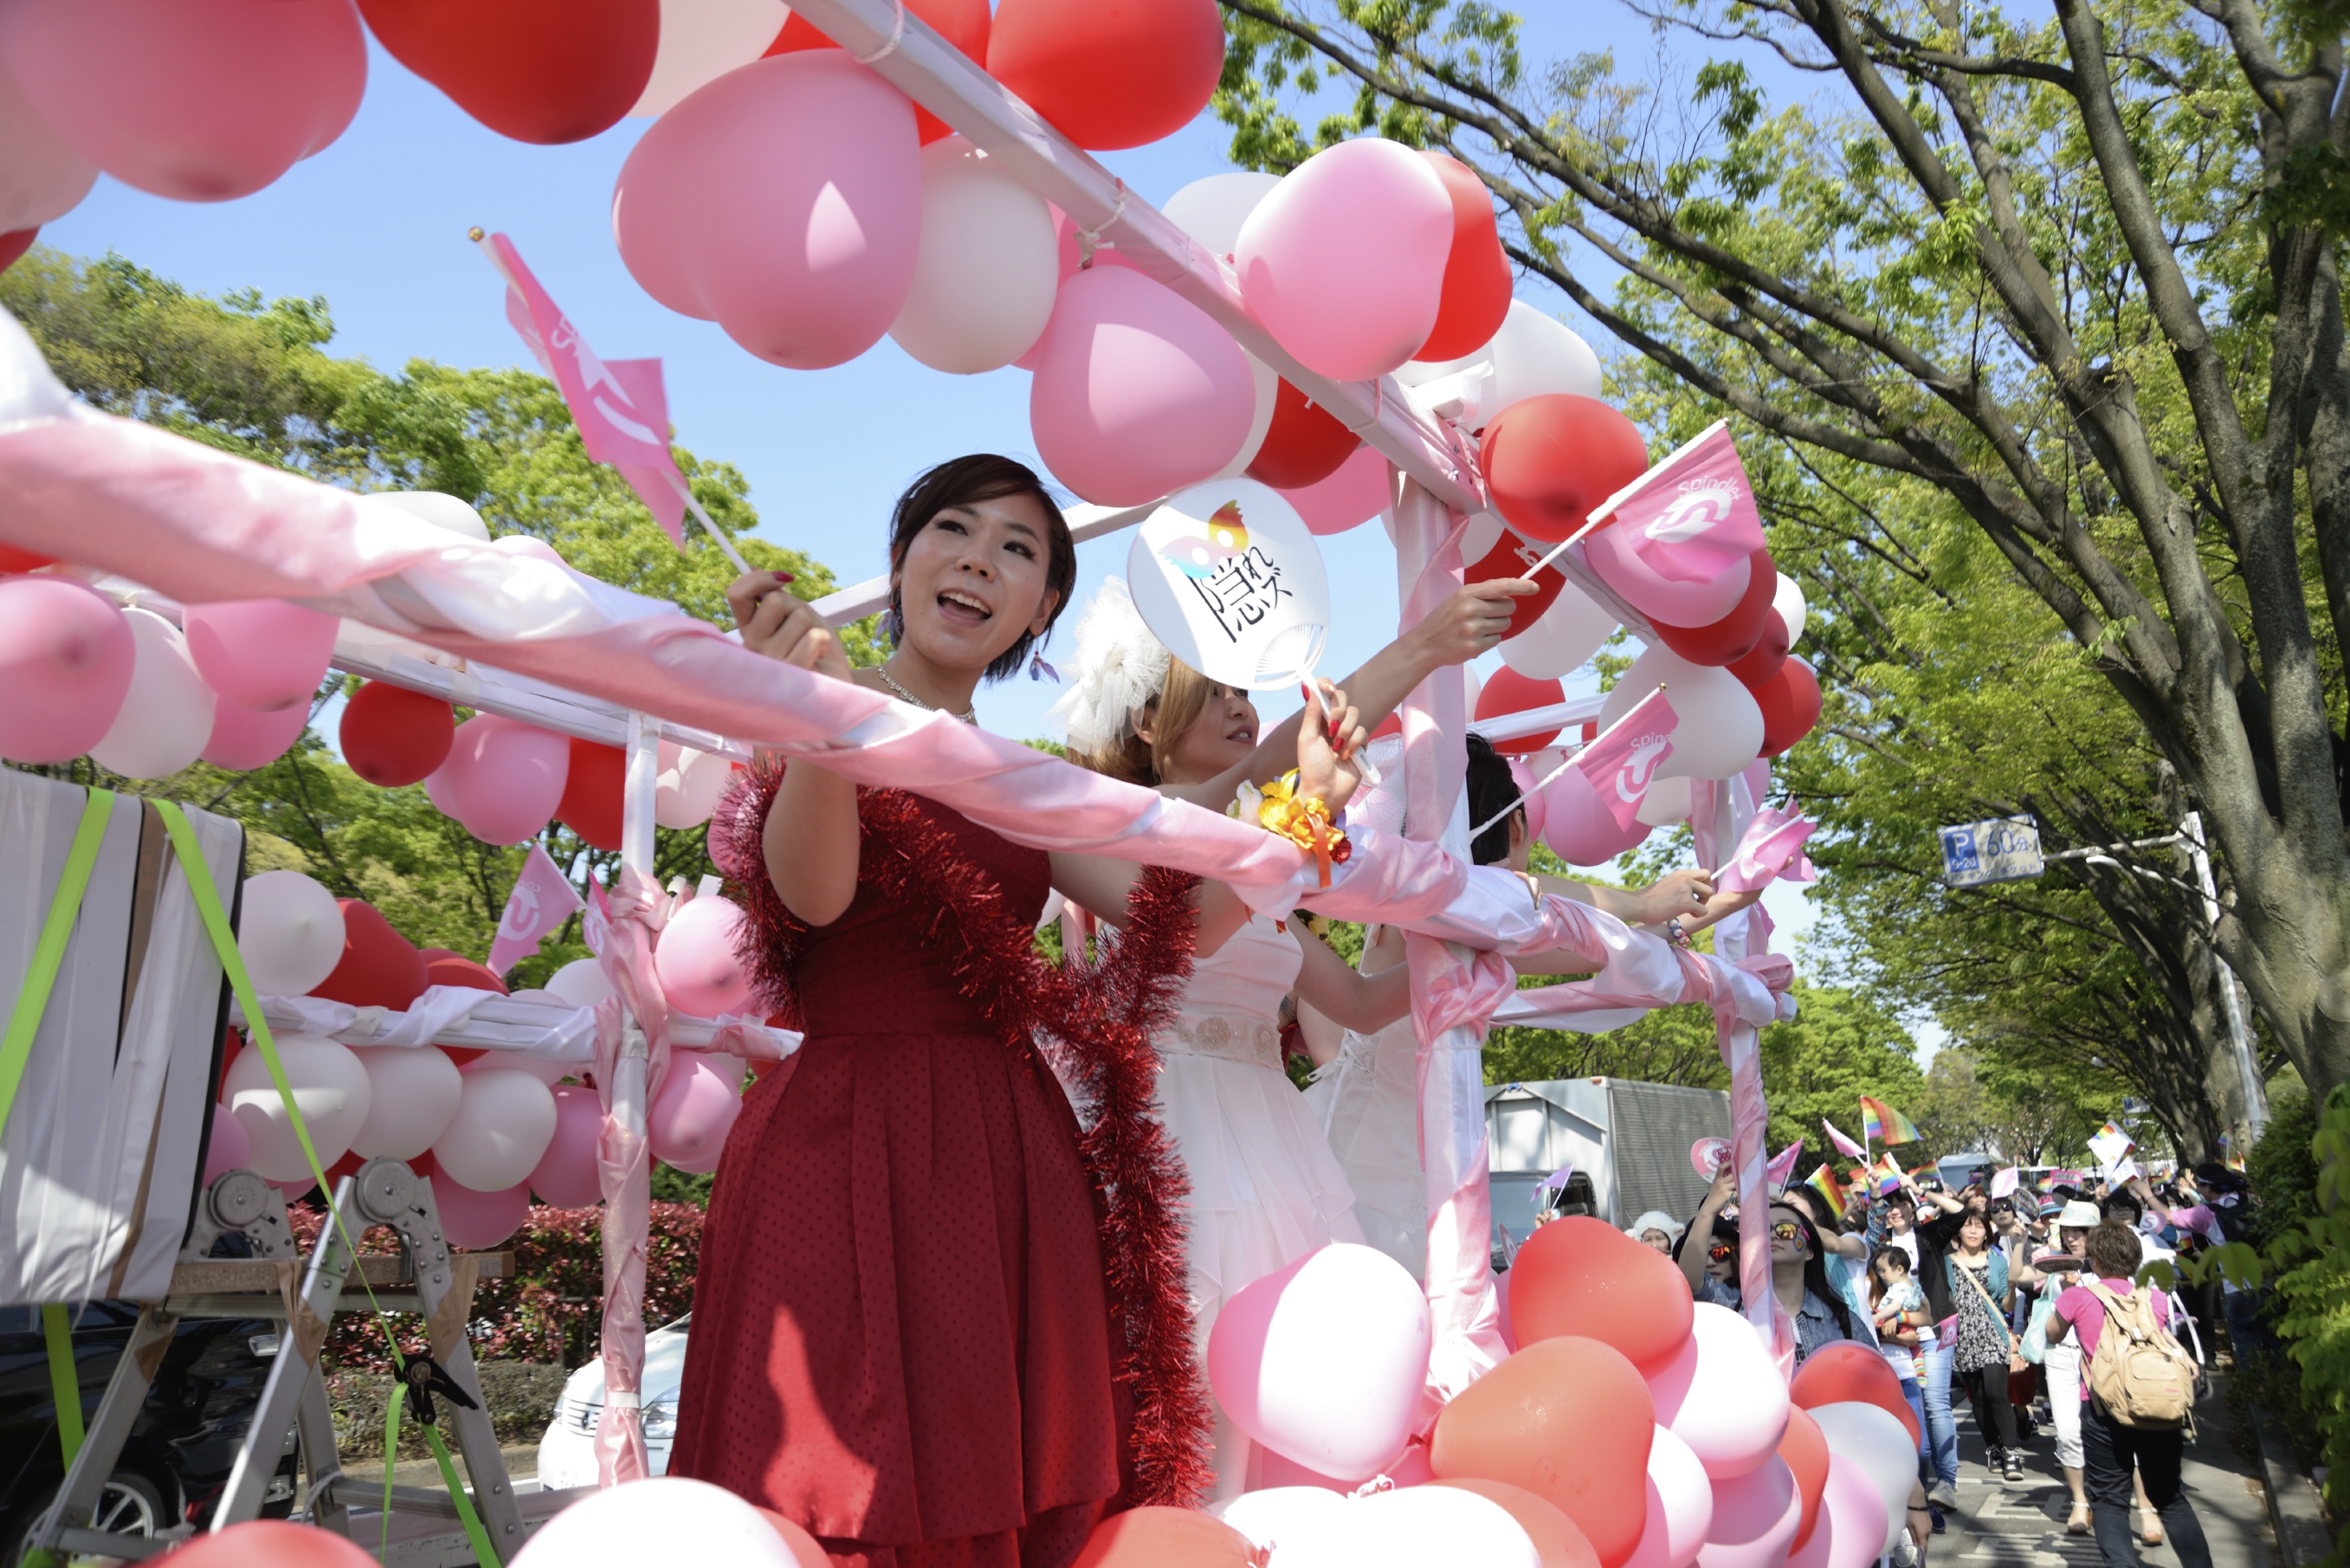 Participants at the Tokyo Rainbow Pride parade in April 2015. | ISTOCK